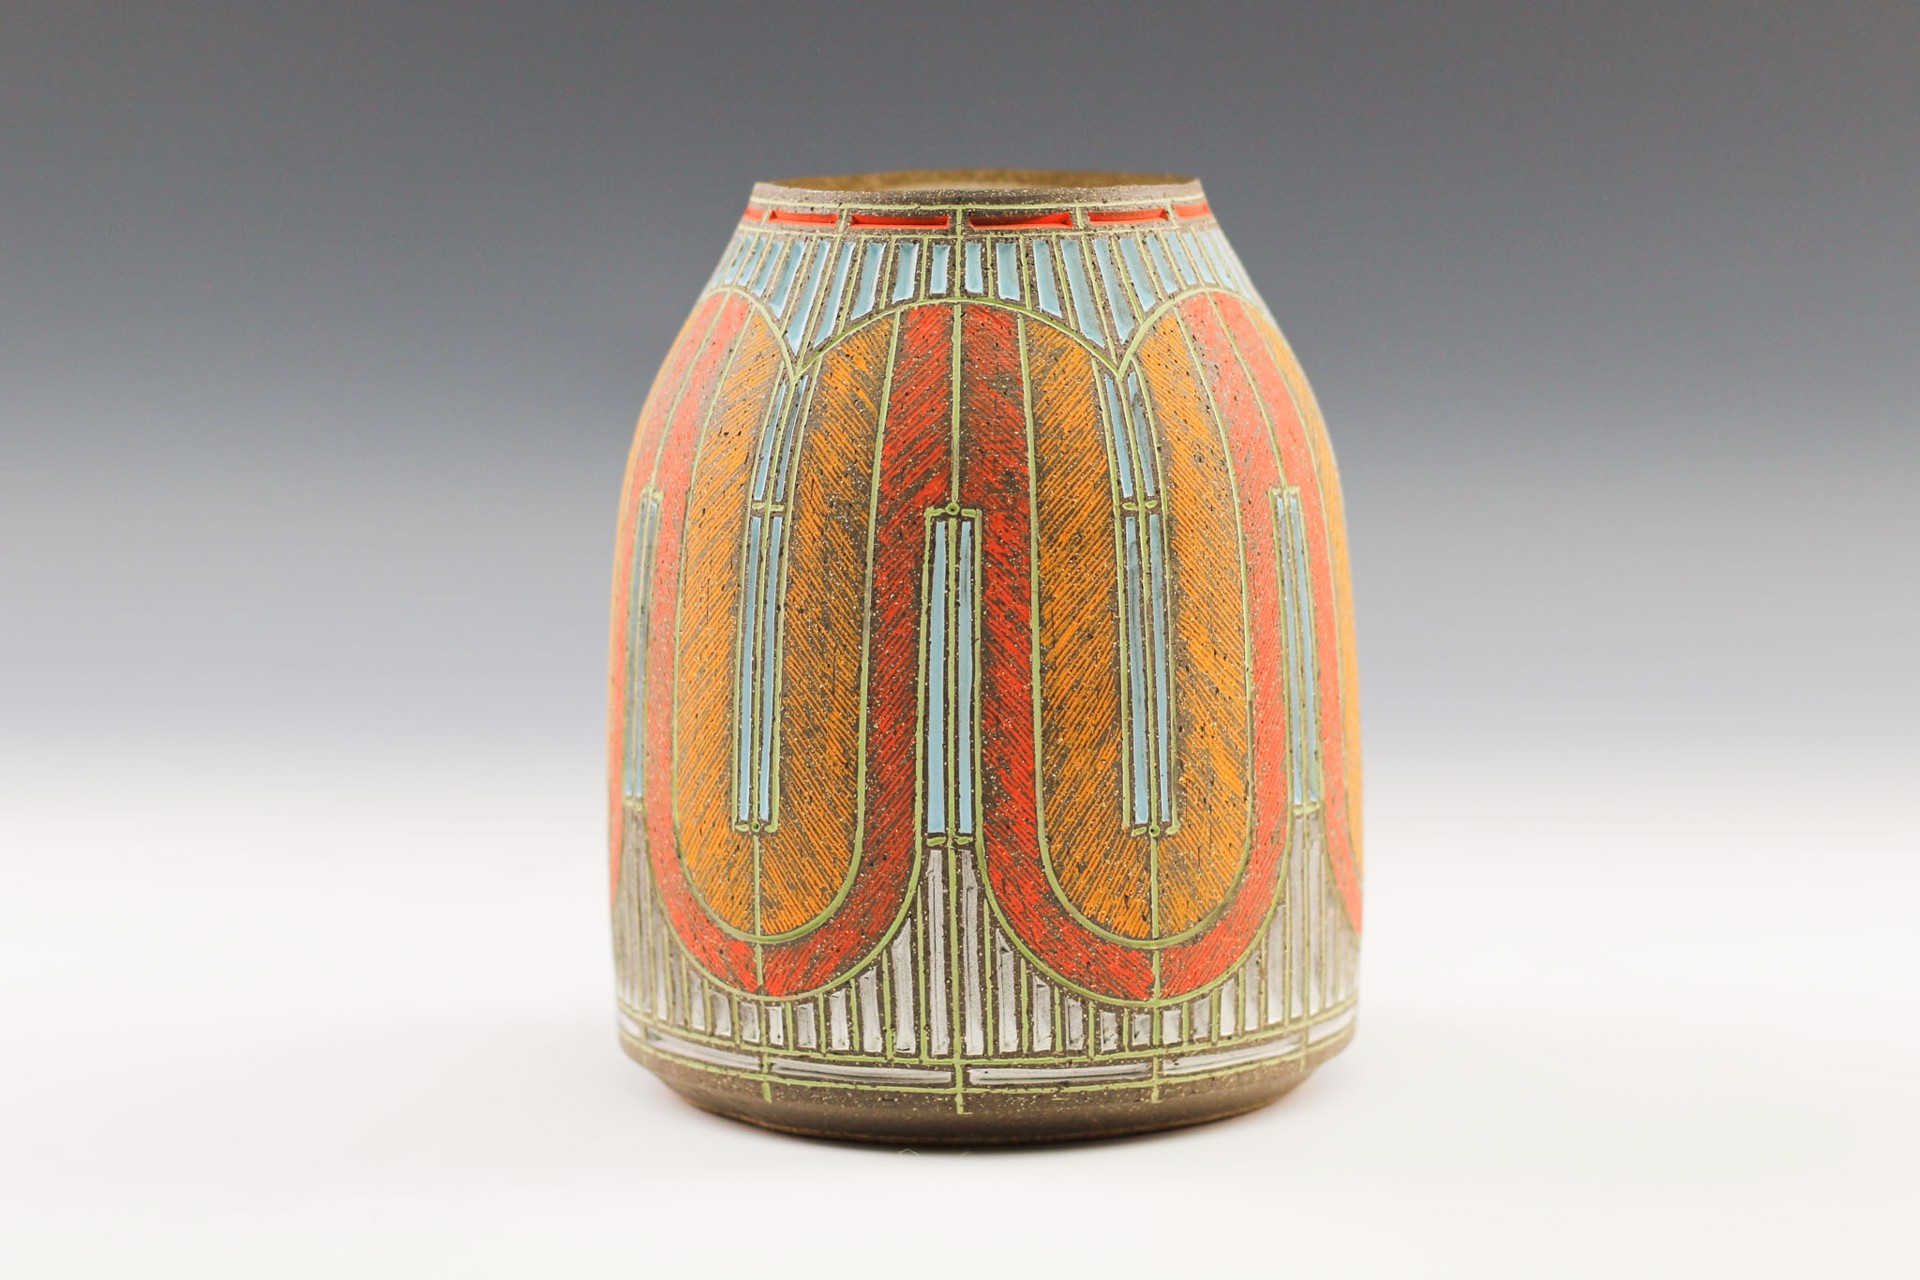 Vase by Matt Repsher